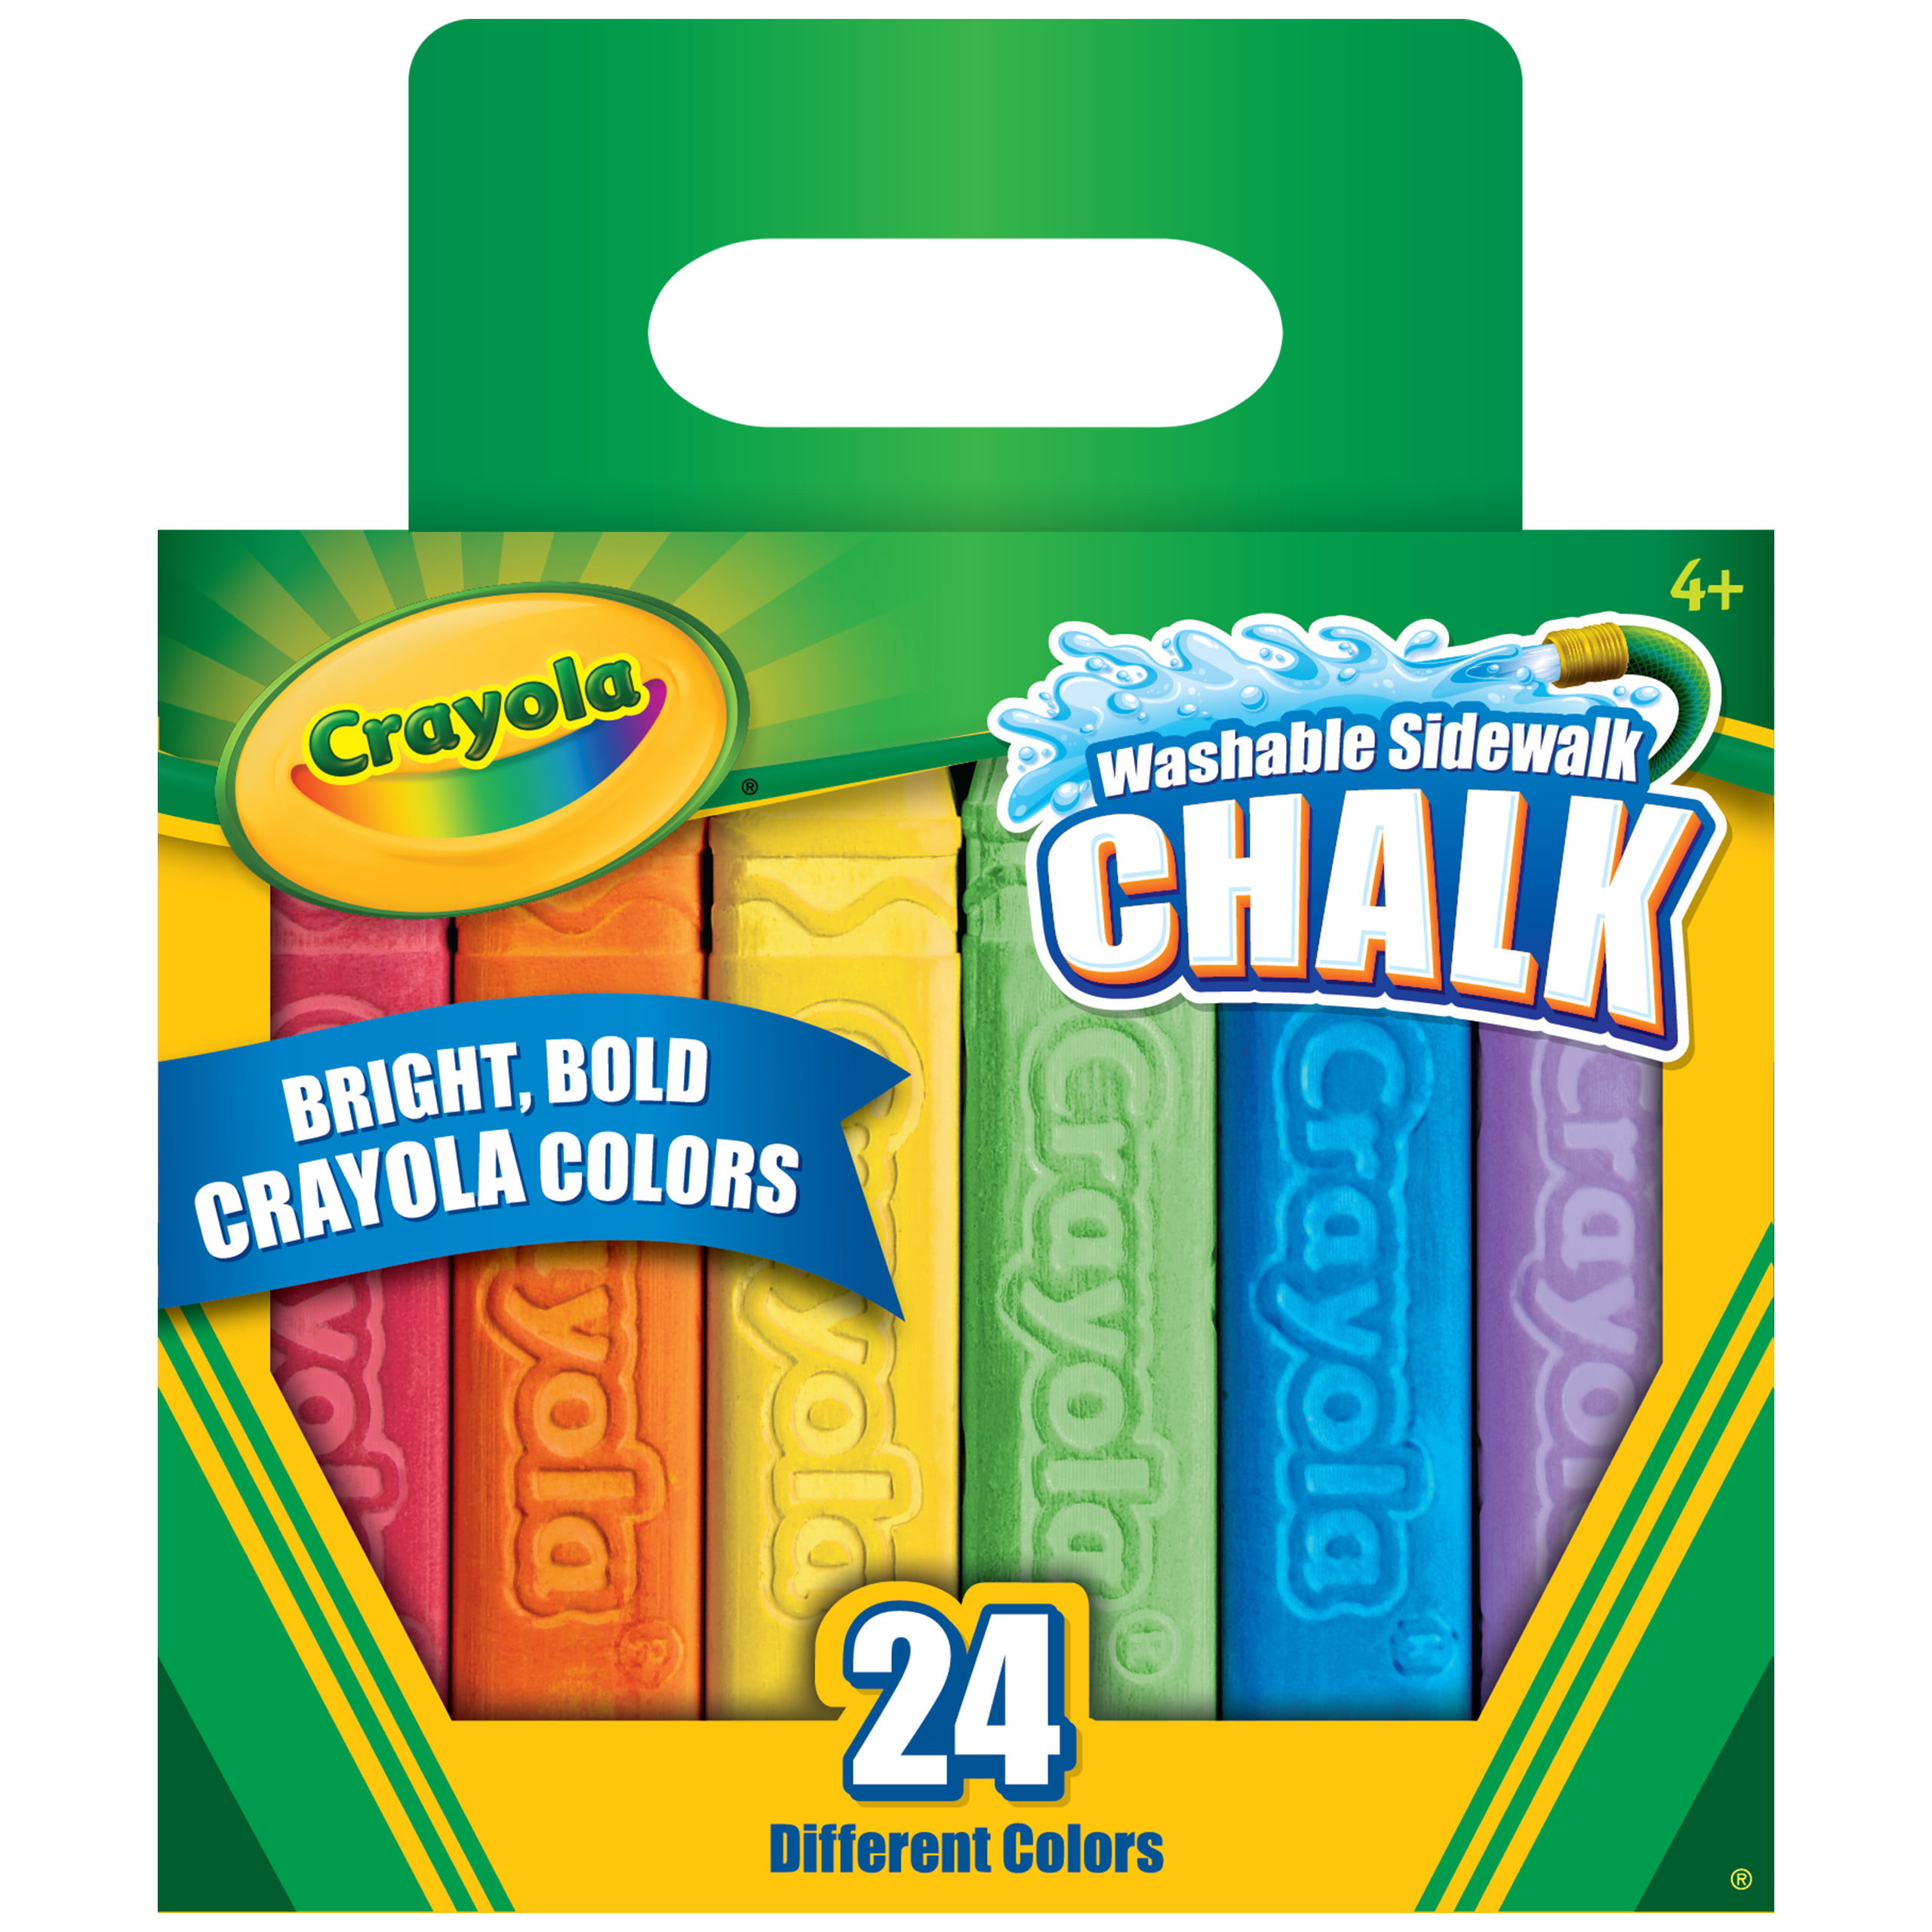 24-Count Crayola Washable Sidewalk Chalk (Assorted Colors) $1.98 + Free S&H w/ Walmart+ or $35+